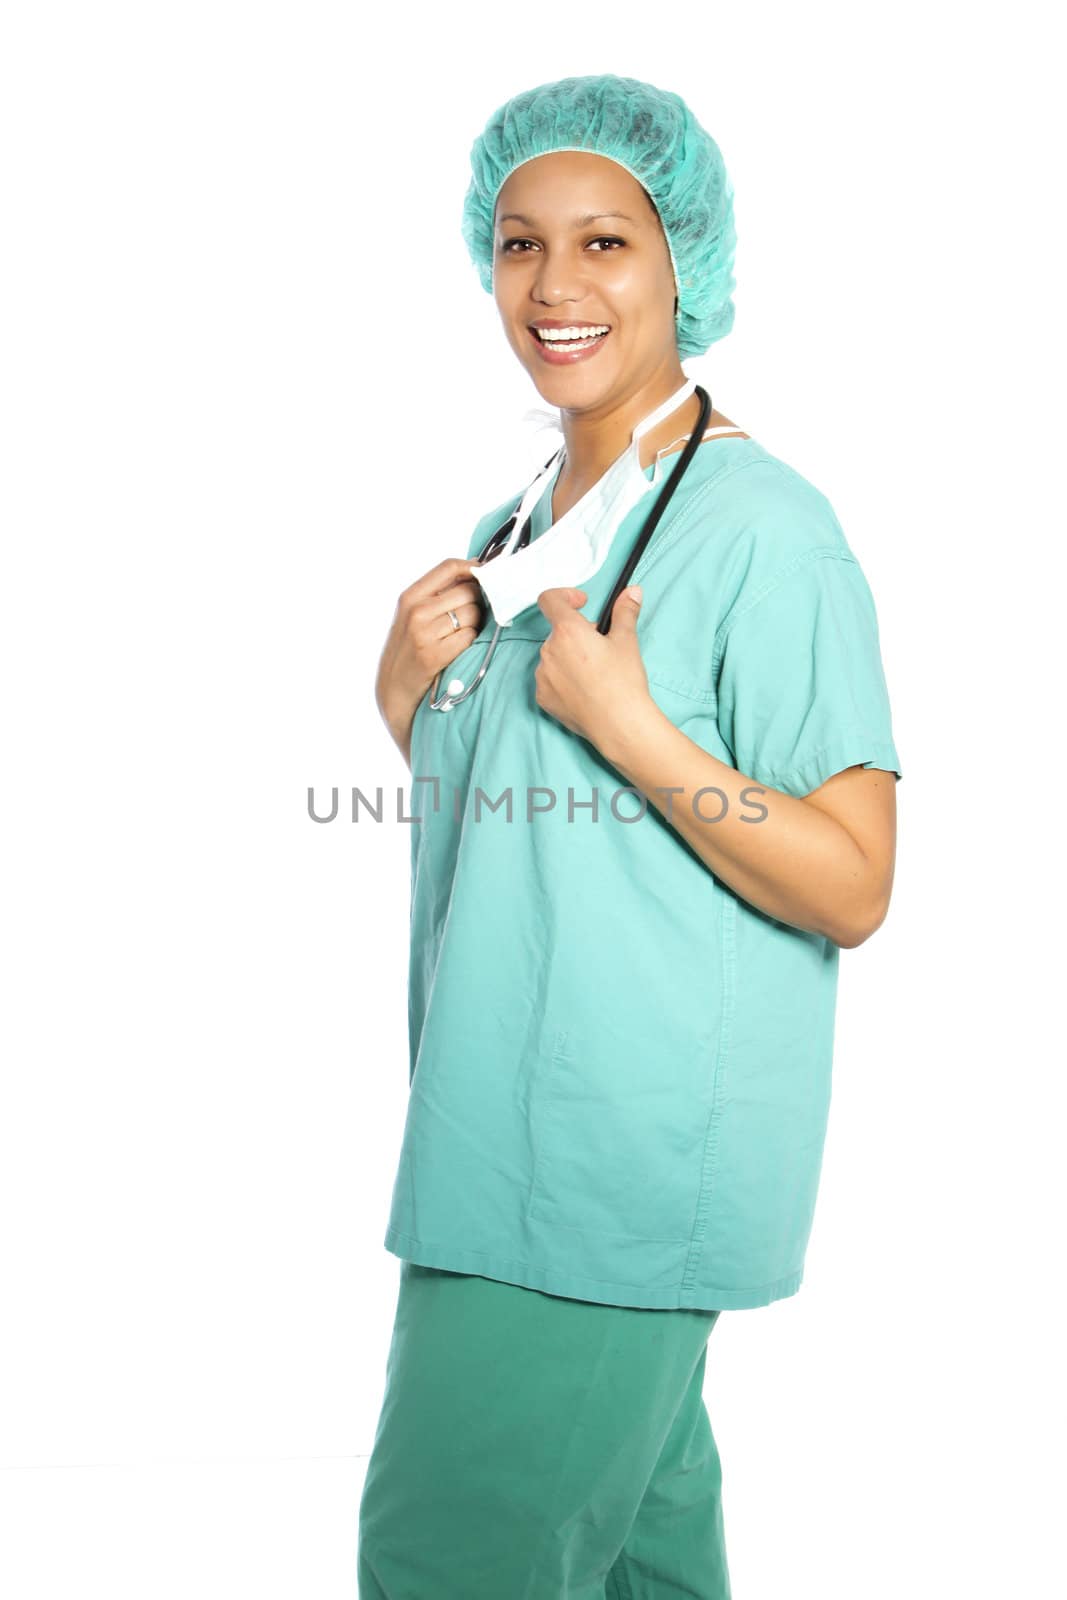 Happy nurse or doctor in scrubs by Farina6000